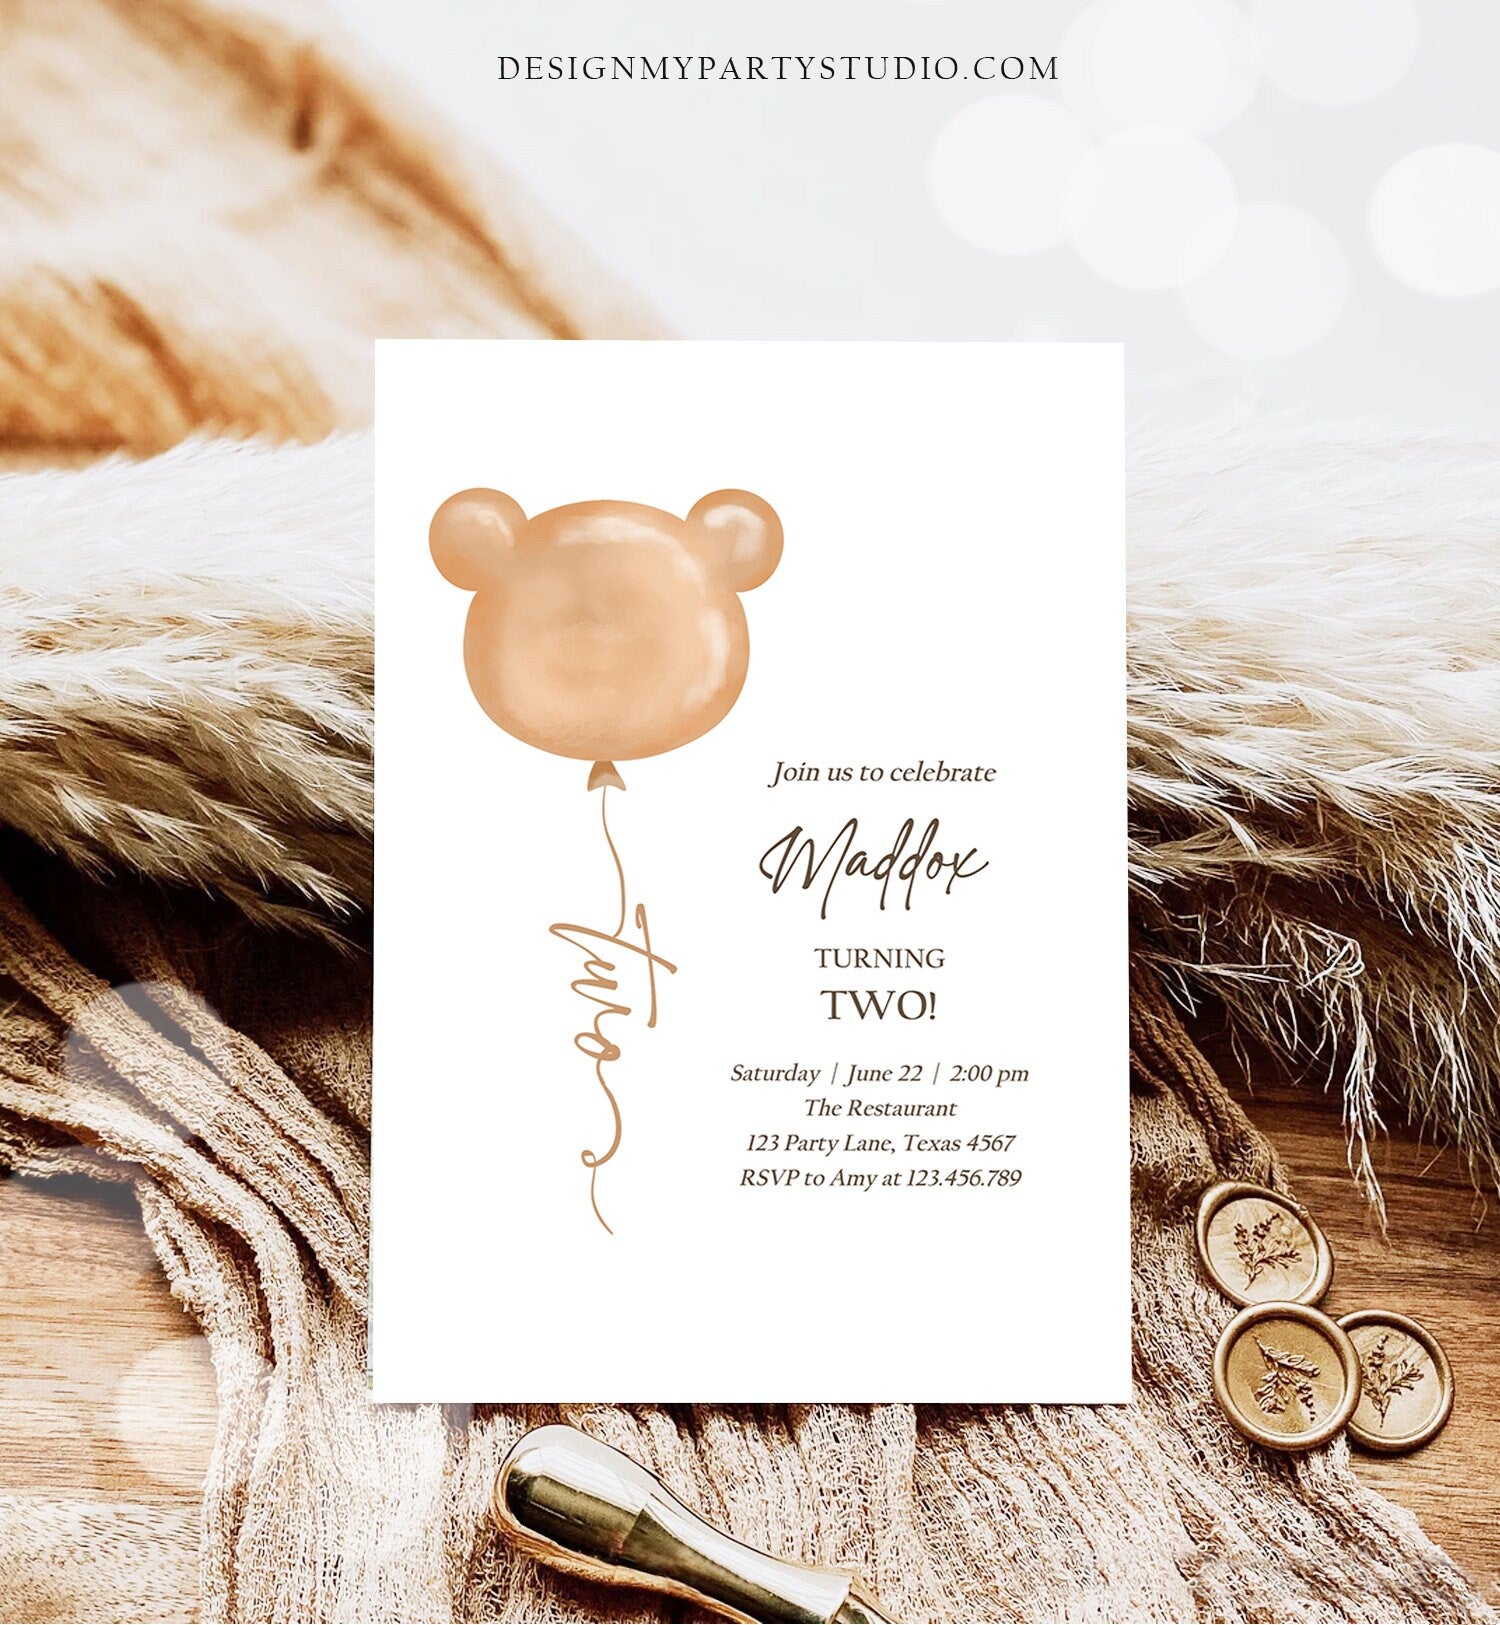 Editable Bear Birthday Invitation 2nd Birthday Bear Balloon Teddy Bears Picnic Neutral Boho Printable Template Instant Download Corjl 0439